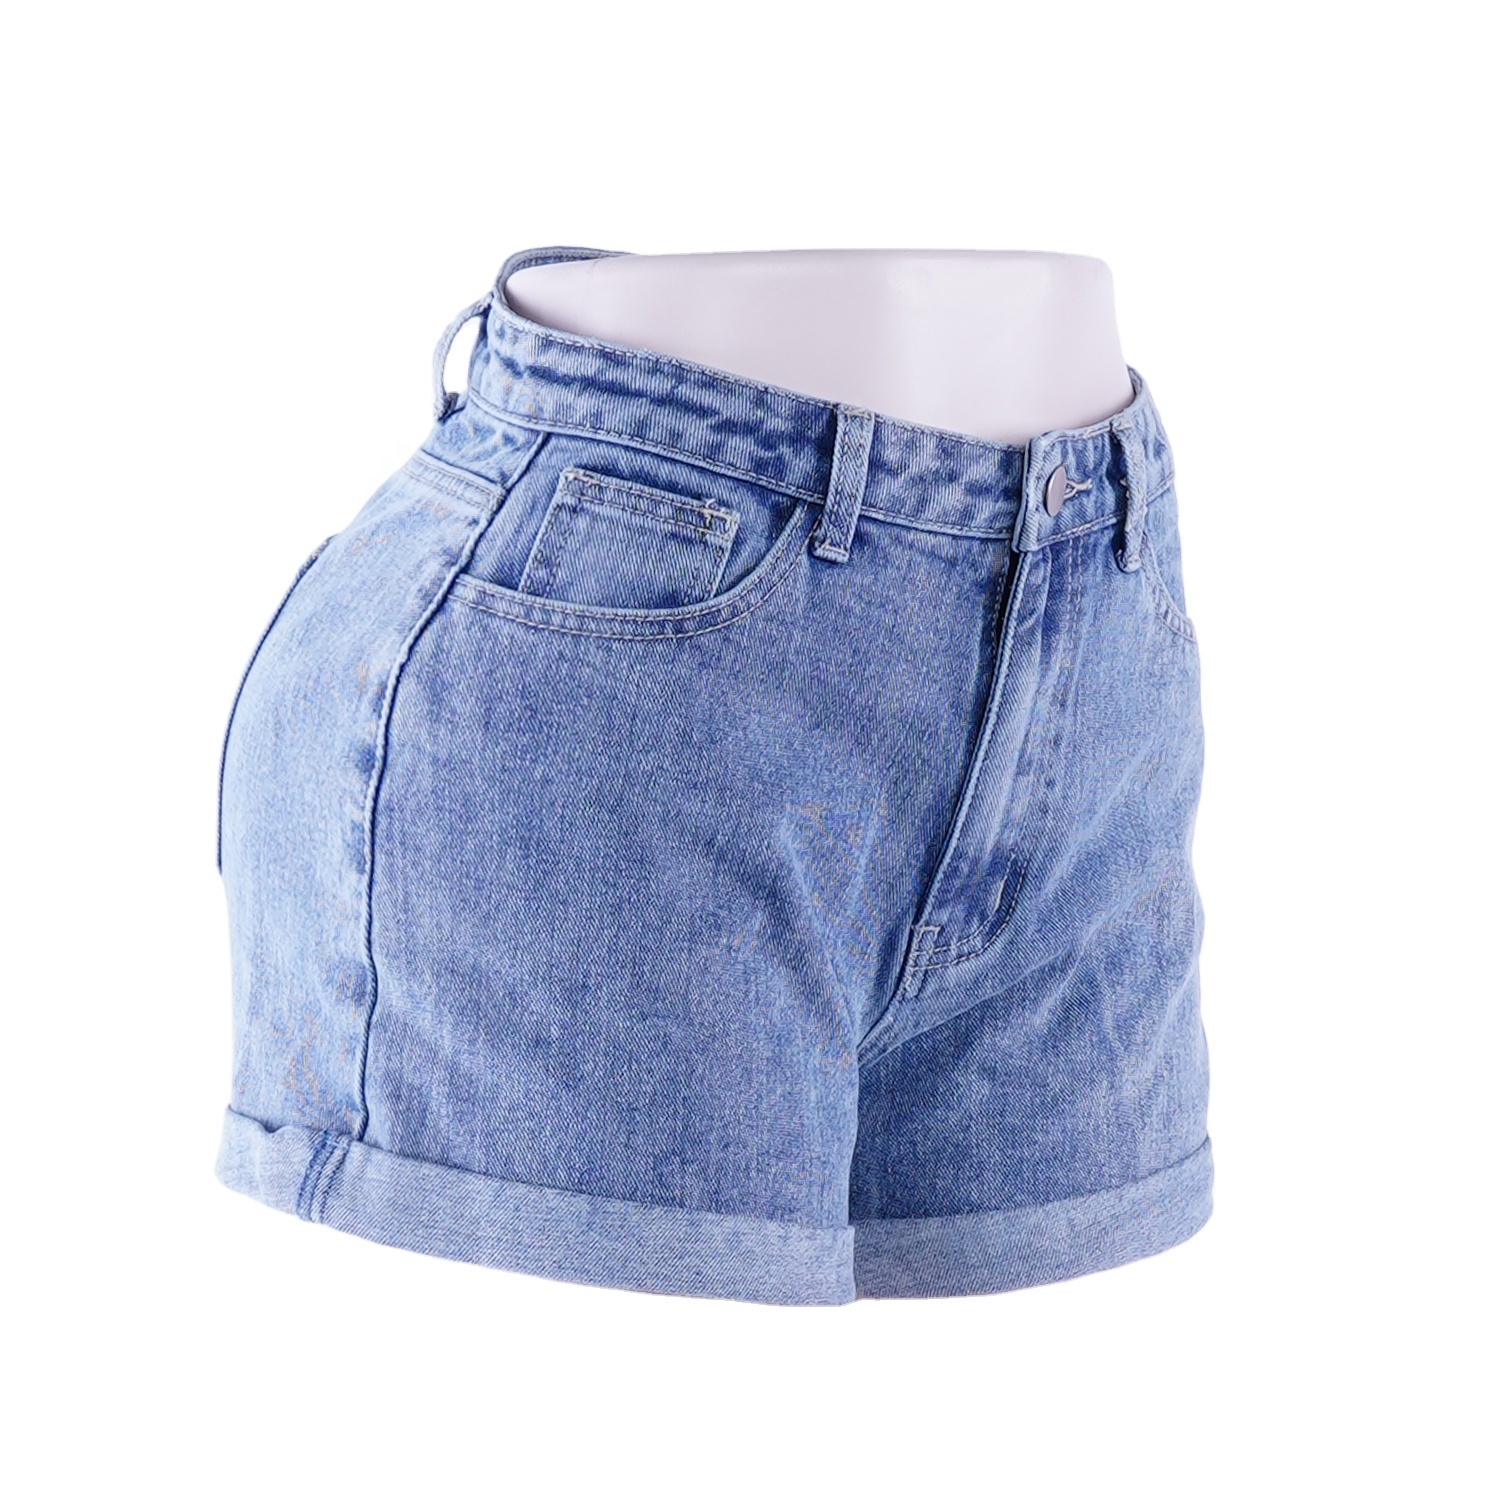 SKYKINGDOM custom design girl jeans cotton denim shorts sexy lady light blue low waisted regular casual short jeans for women